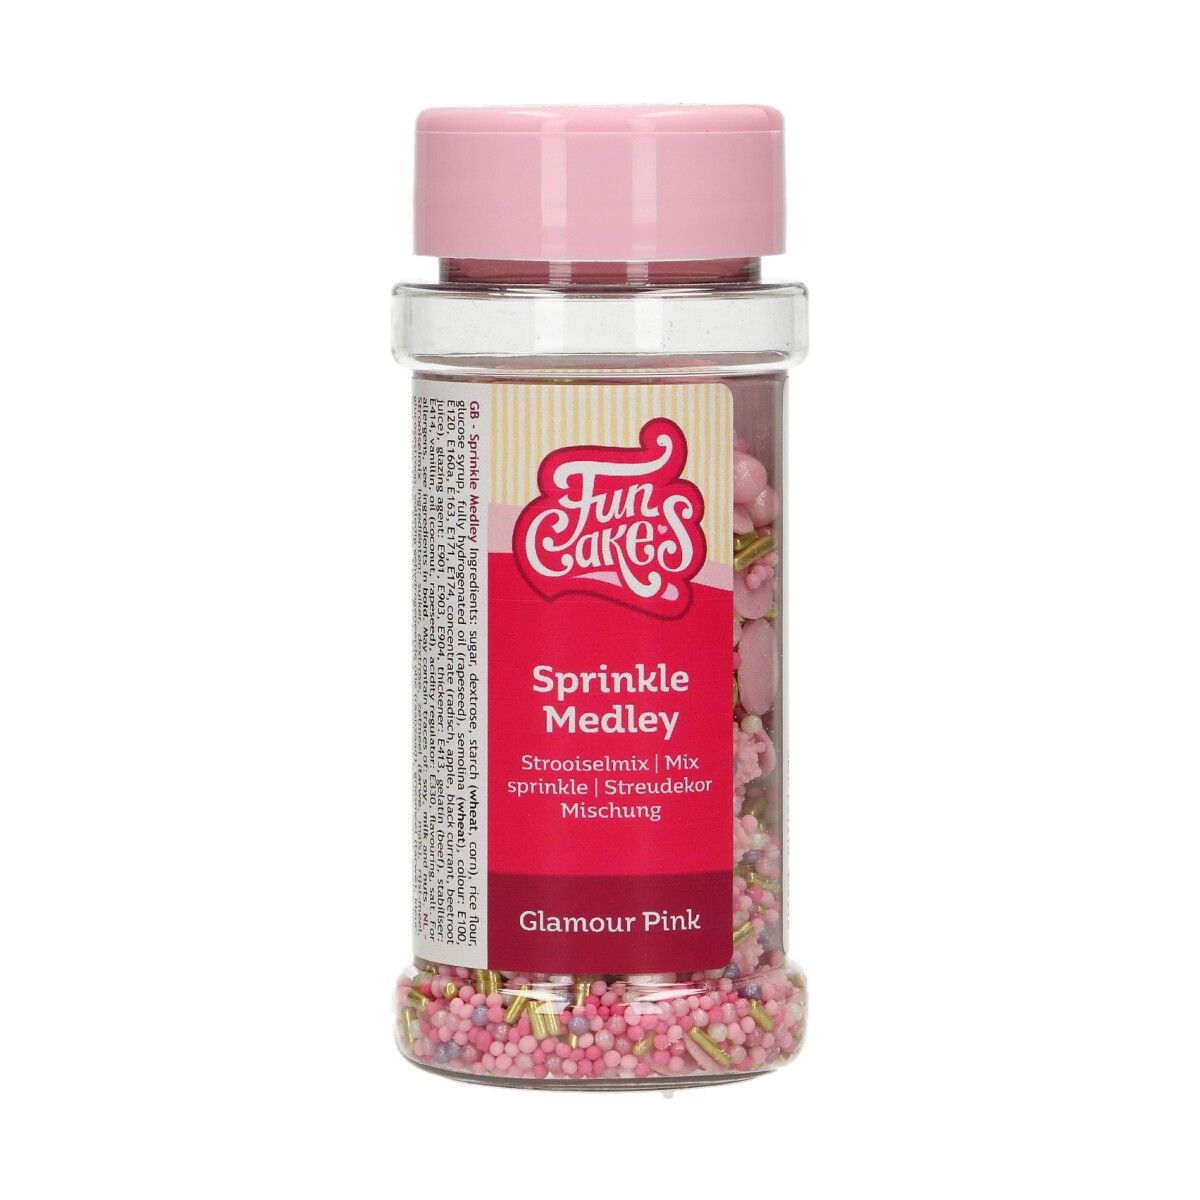 Imagen de producto: https://tienda.postreadiccion.com/img/articulos/secundarias14244-sprinkles-medley-glamour-pink-65-g-funcakes-1.jpg